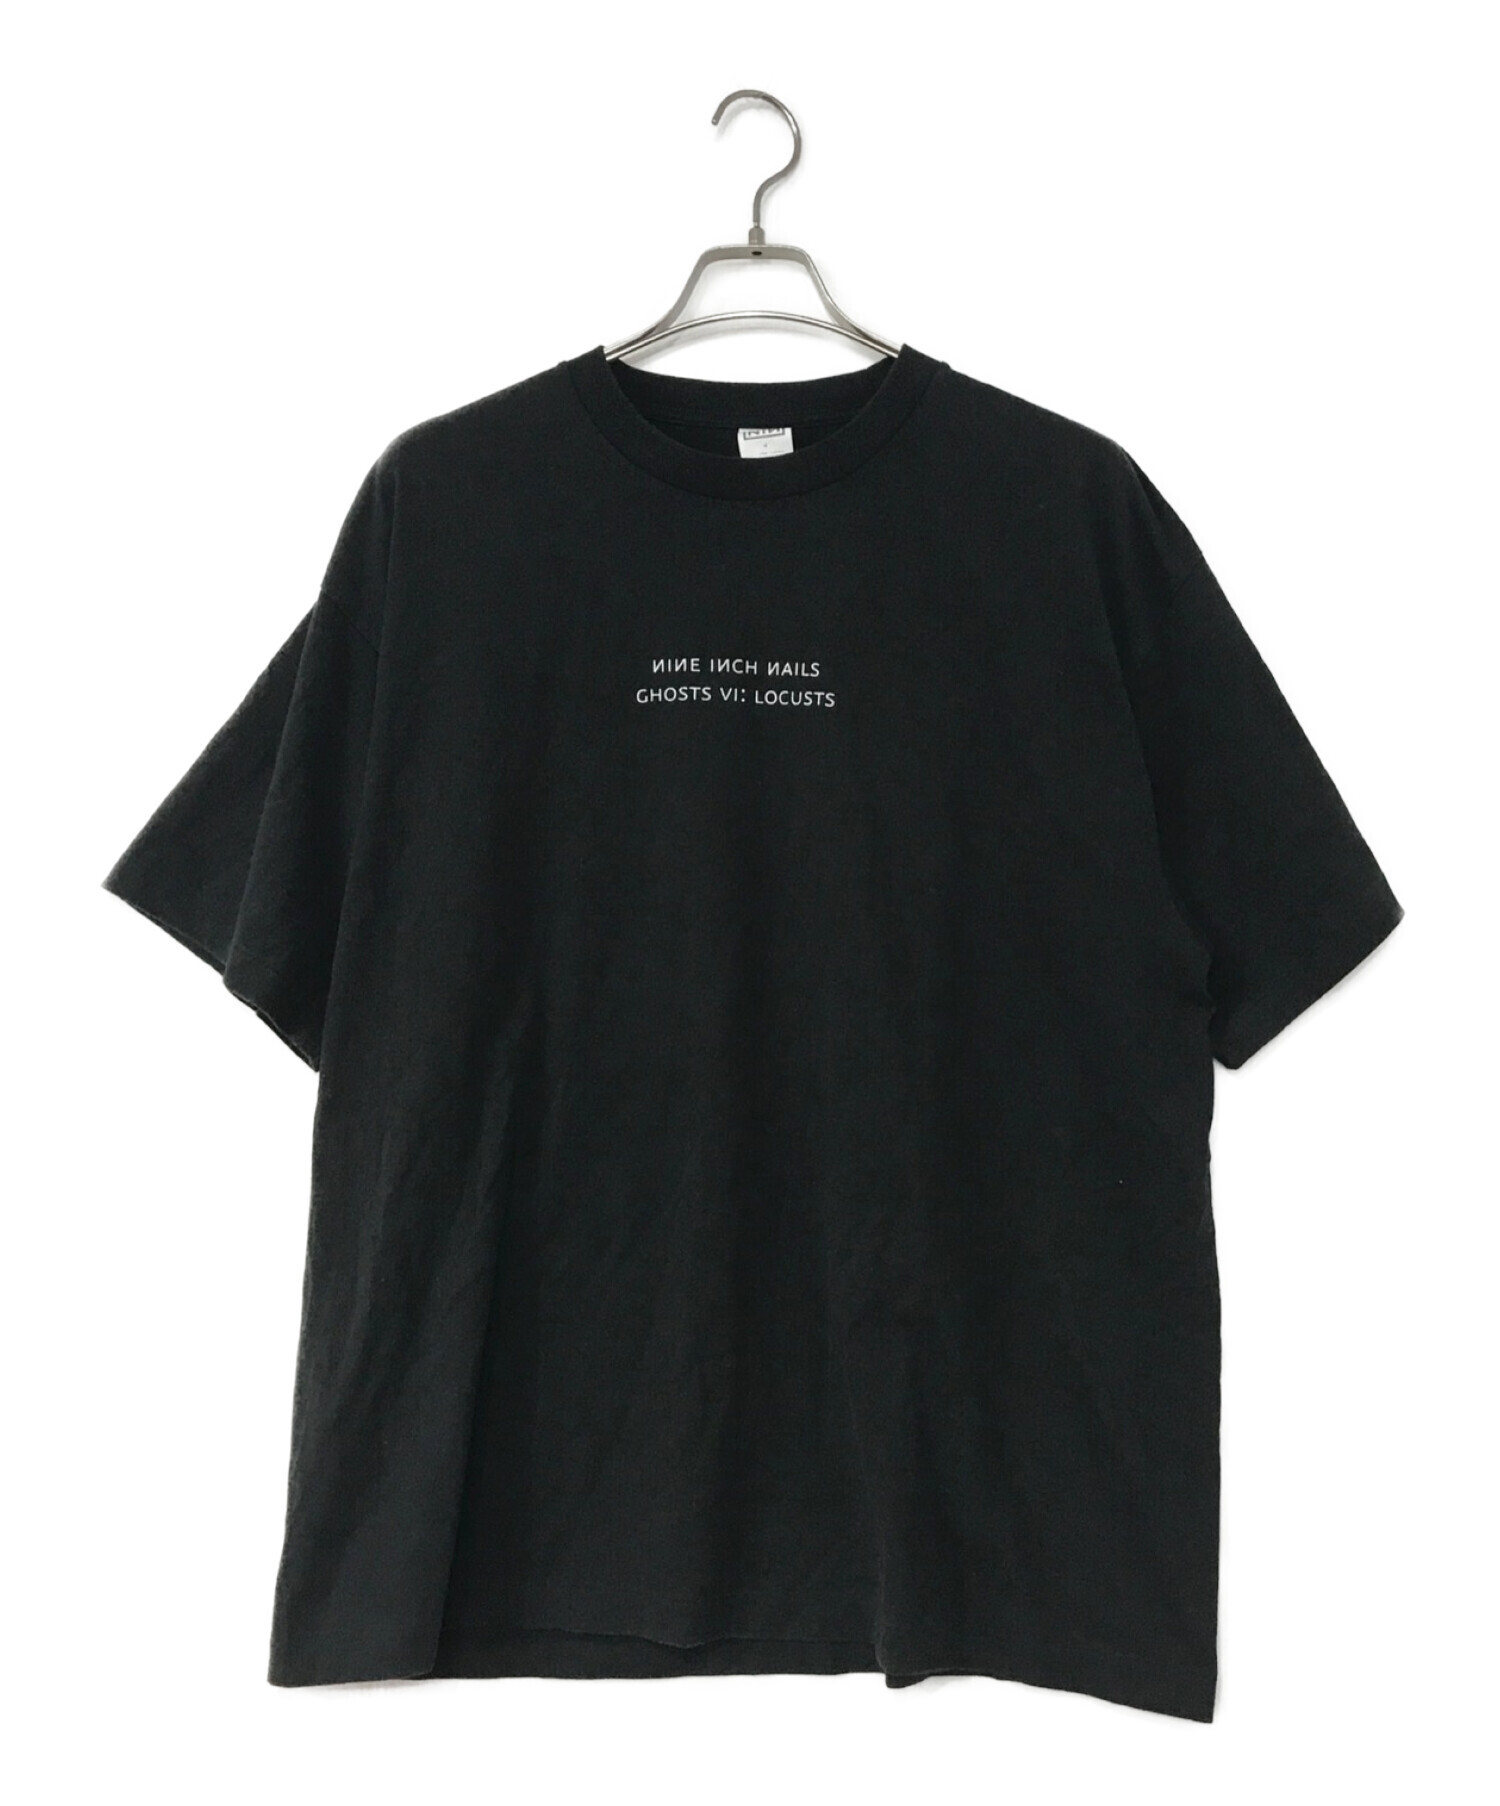 COMOLI NINE INCH NAILES Tシャツ サイズ4